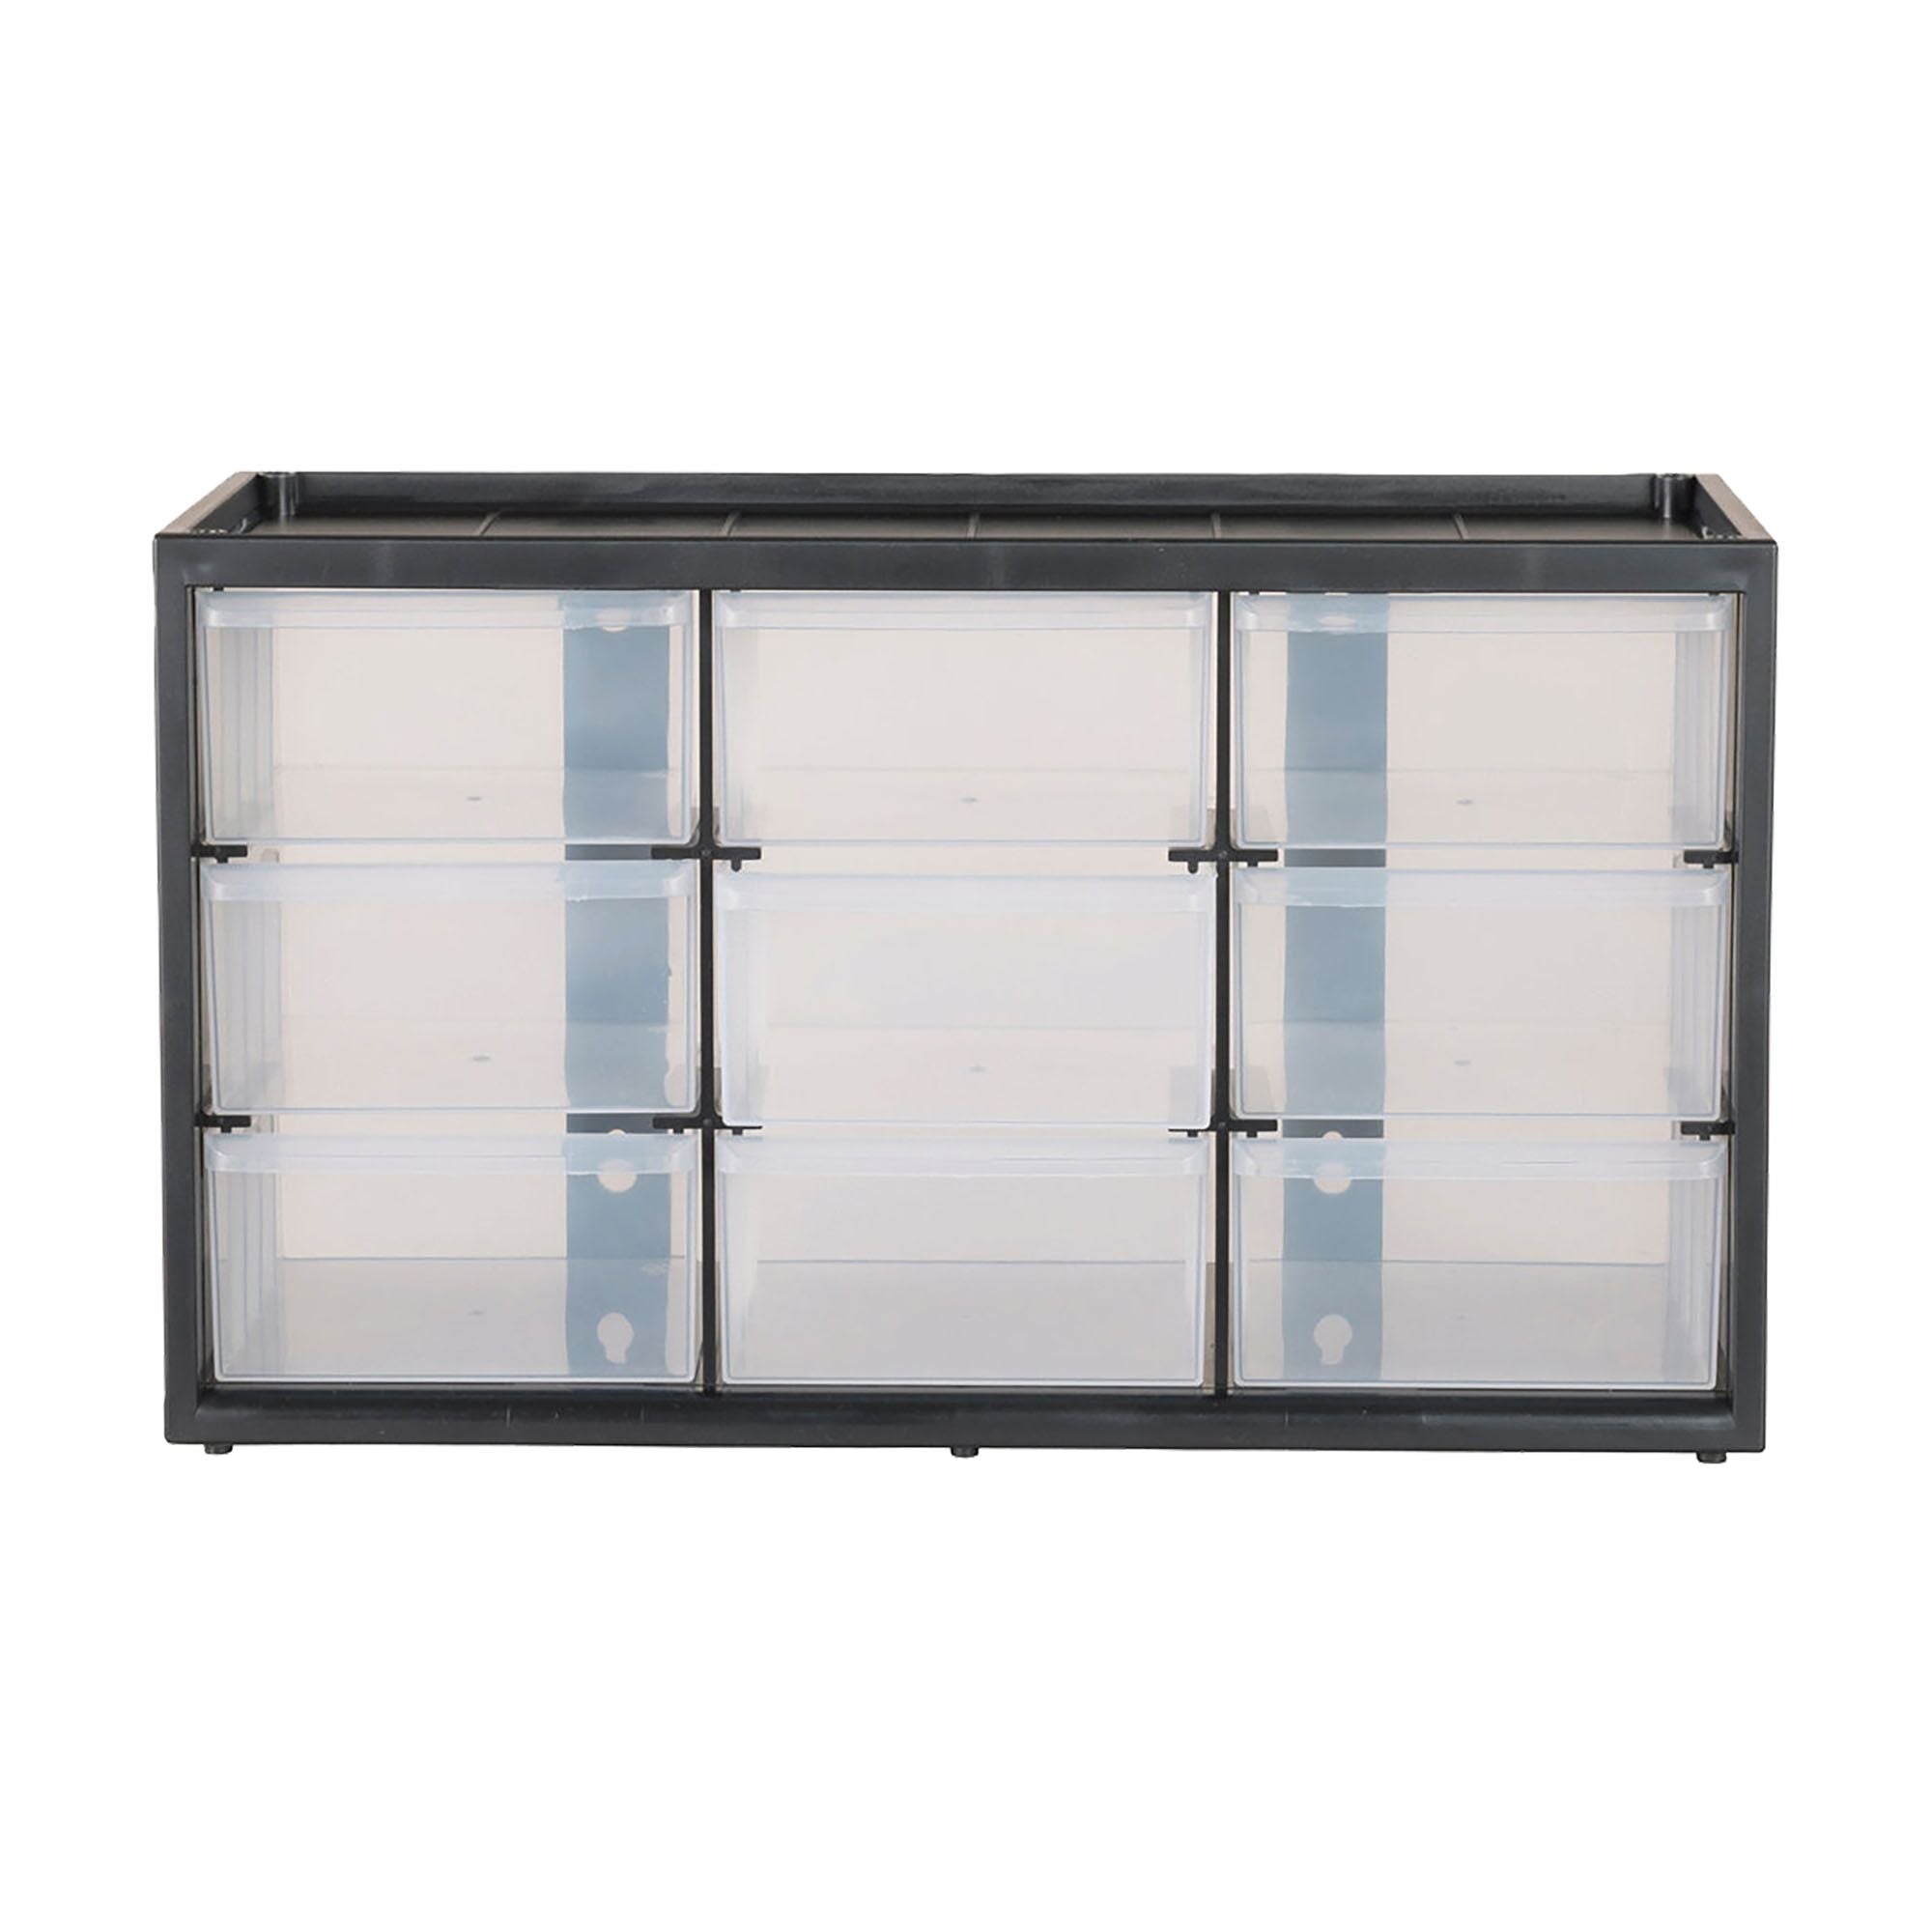 CRAFTSMAN Large Storage Organizer, 39 Compartment, Plastic (CMST40739)